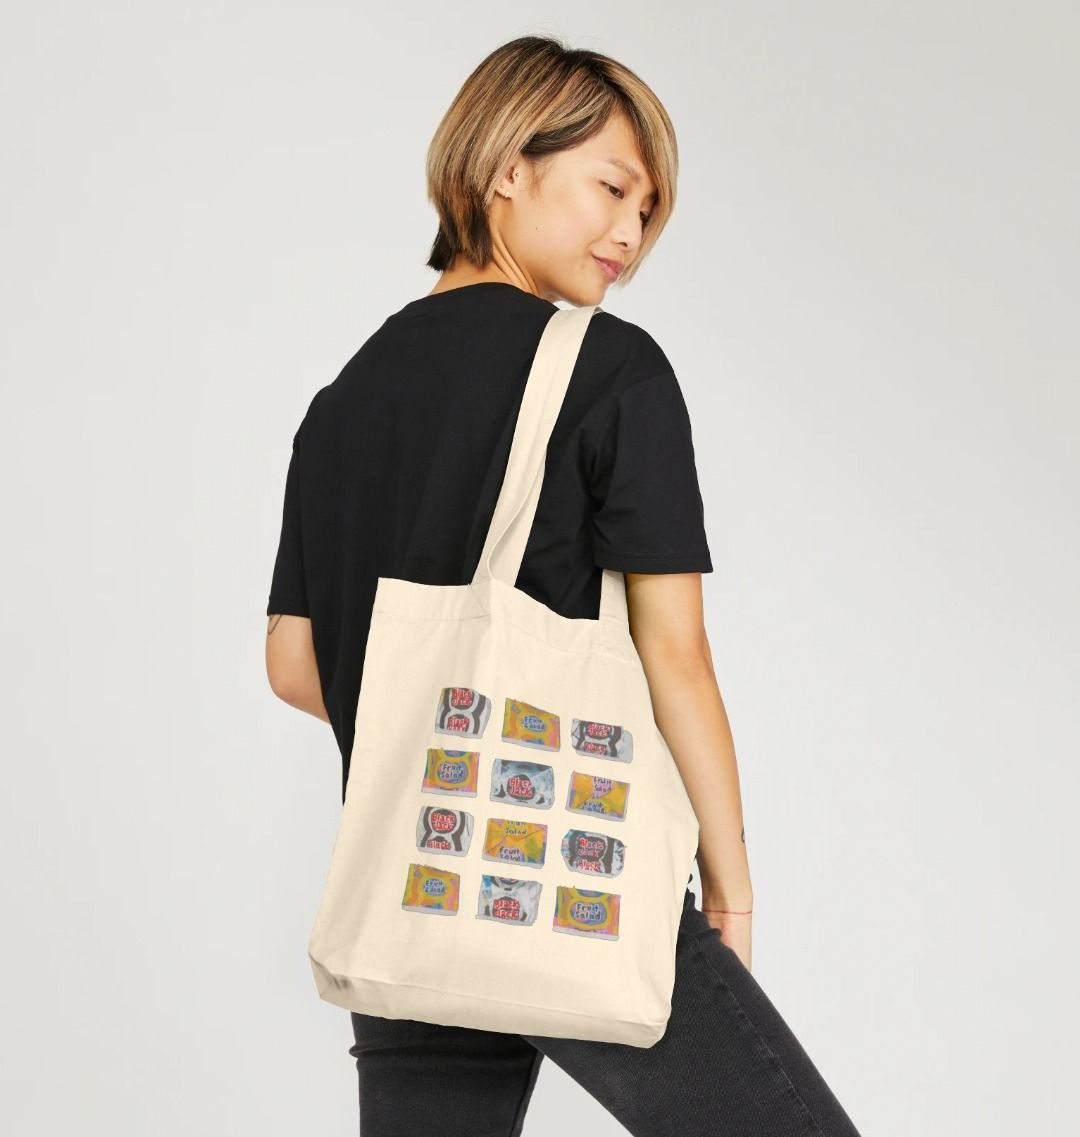 confection perfection organic tote bag - Printed Bag - Sarah Millin